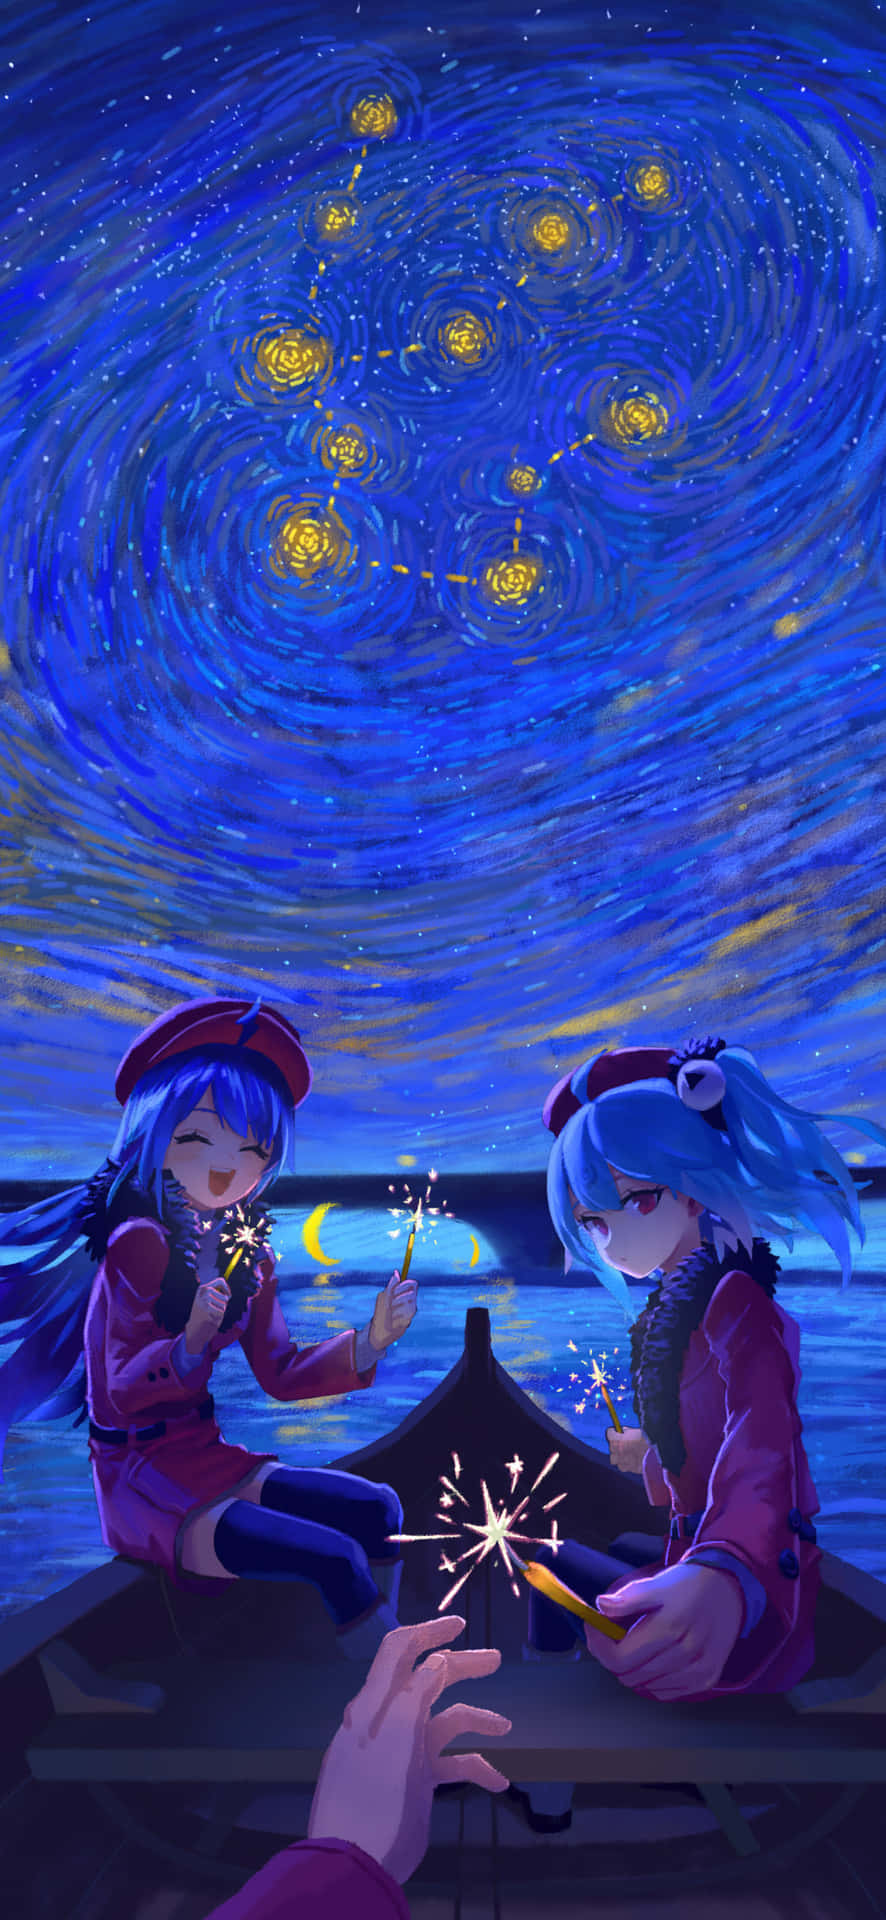 Starry Night Sparkler Celebration Wallpaper